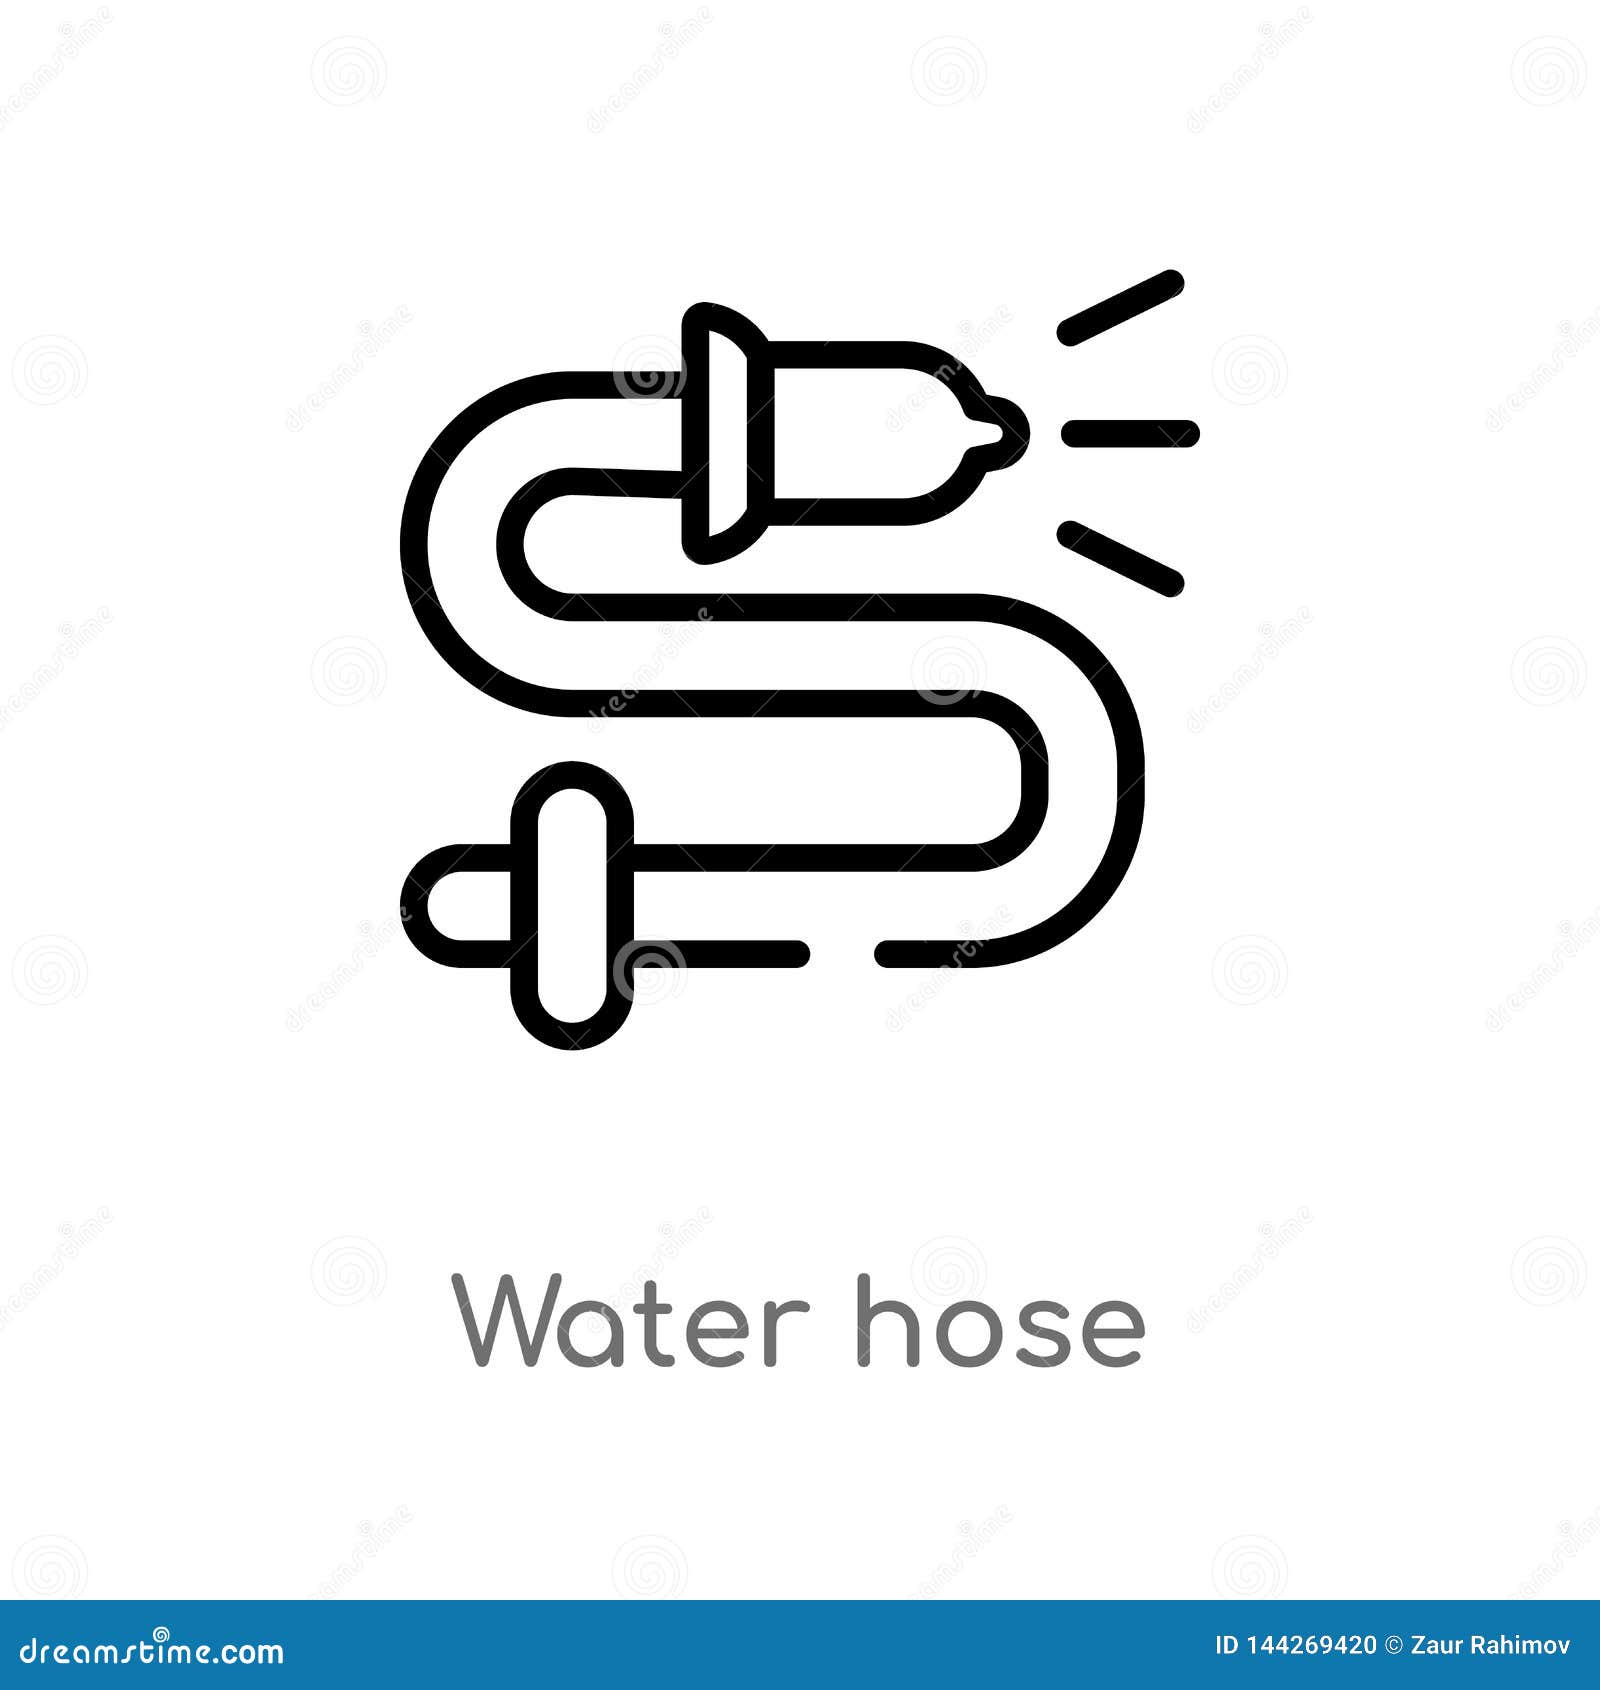 https://thumbs.dreamstime.com/z/outline-water-hose-vector-icon-isolated-black-simple-line-element-illustration-alert-concept-editable-stroke-white-144269420.jpg